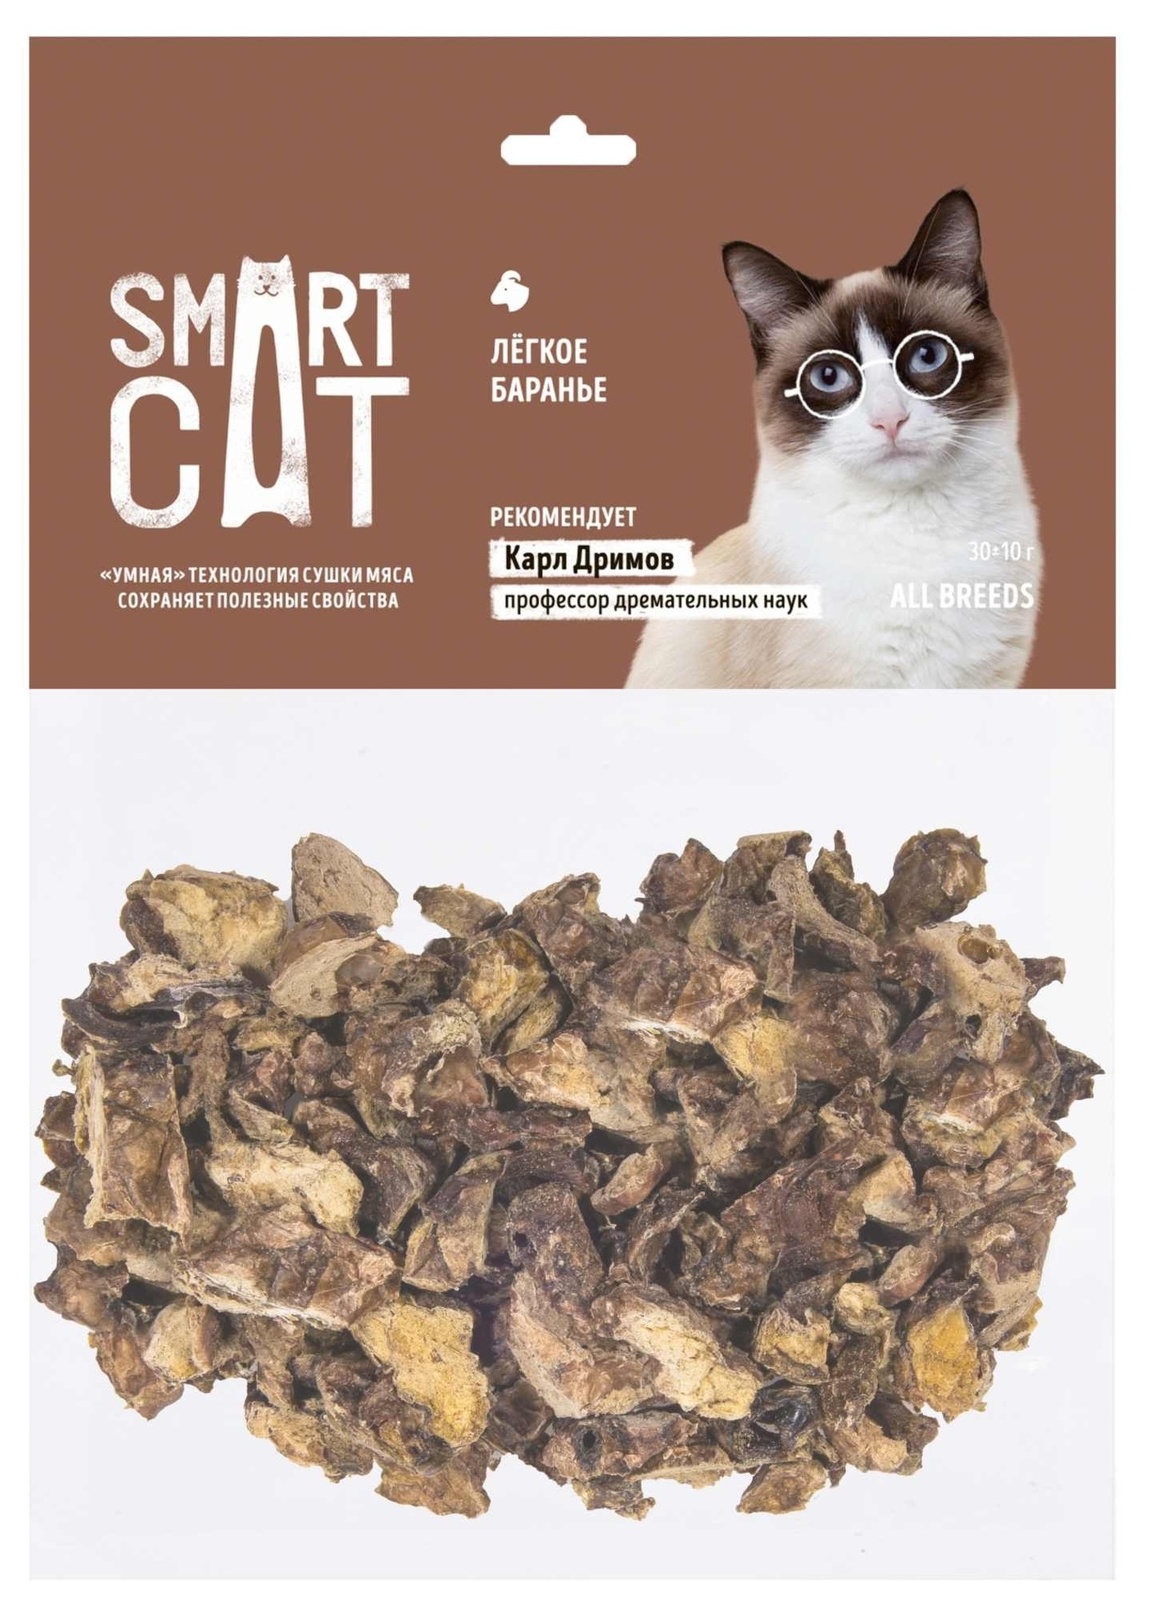 Smart Cat лакомства Smart Cat лакомства легкое баранье (30 г) smart cat лакомства легкое баранье 48аг53 0 03 кг 42859 18 шт